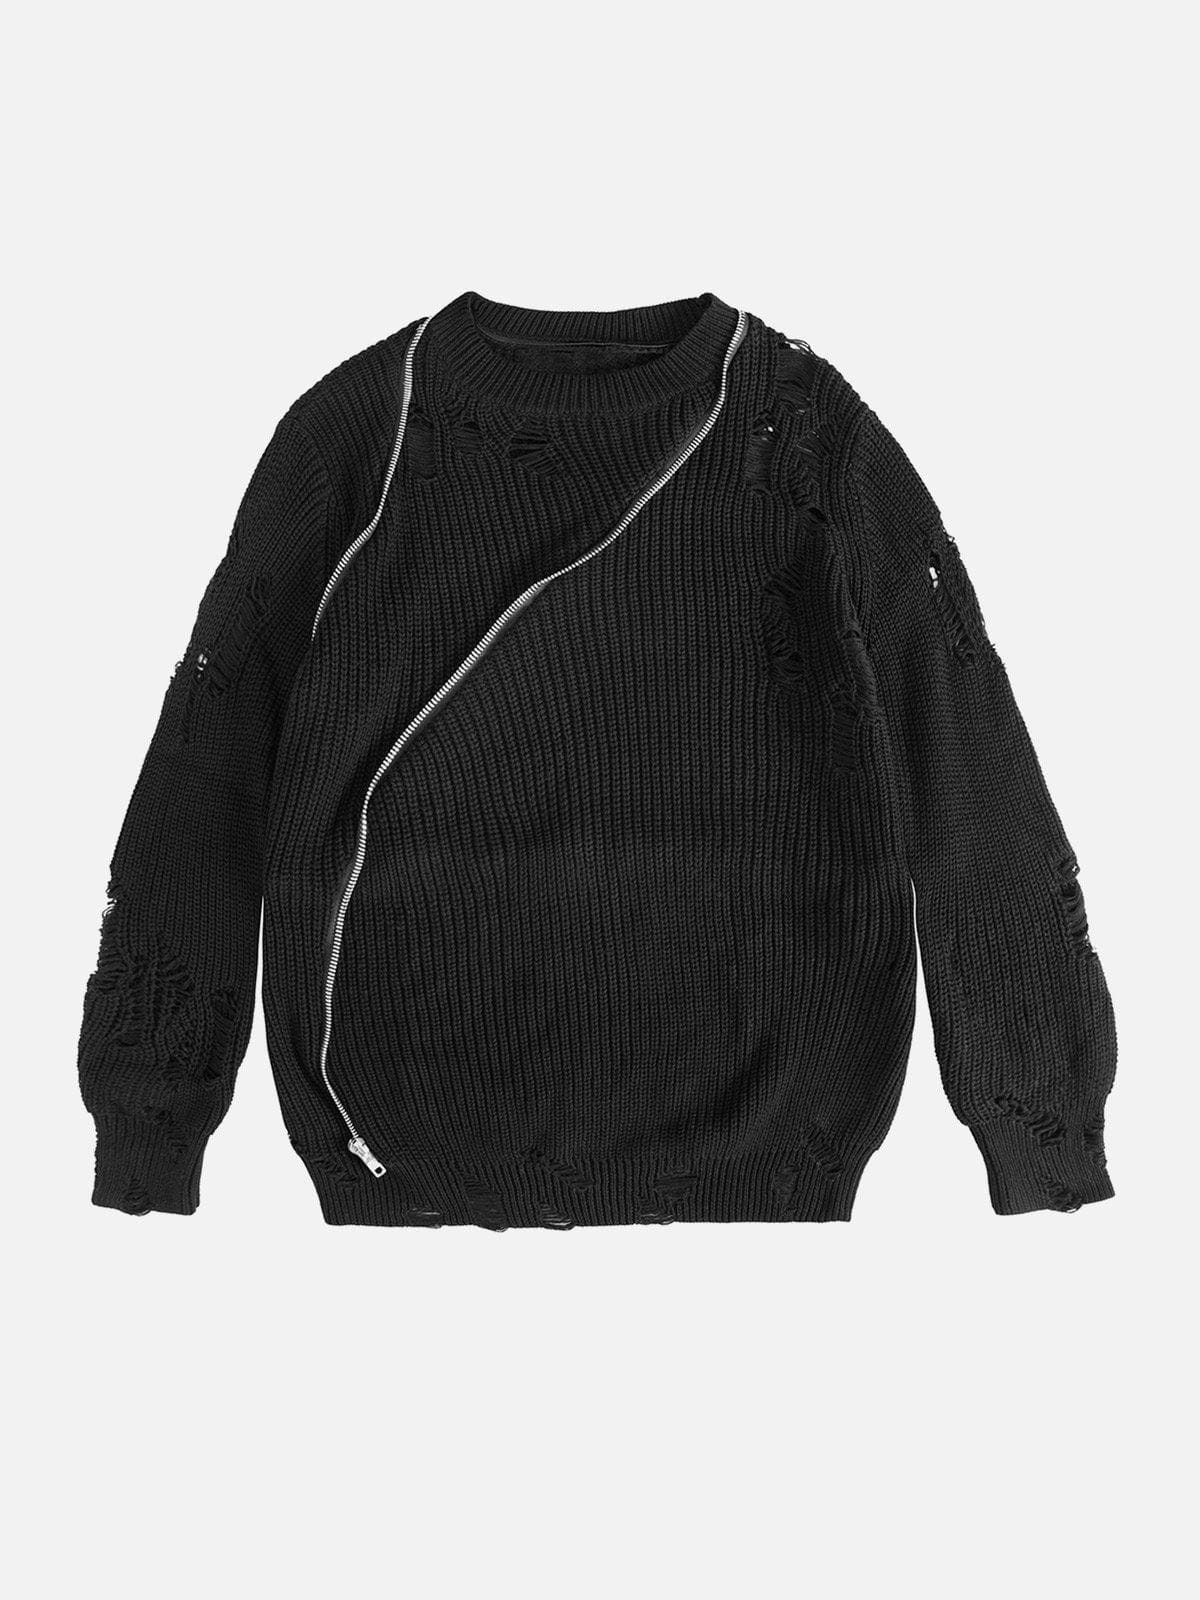 NEV Ripped Zip Sweater